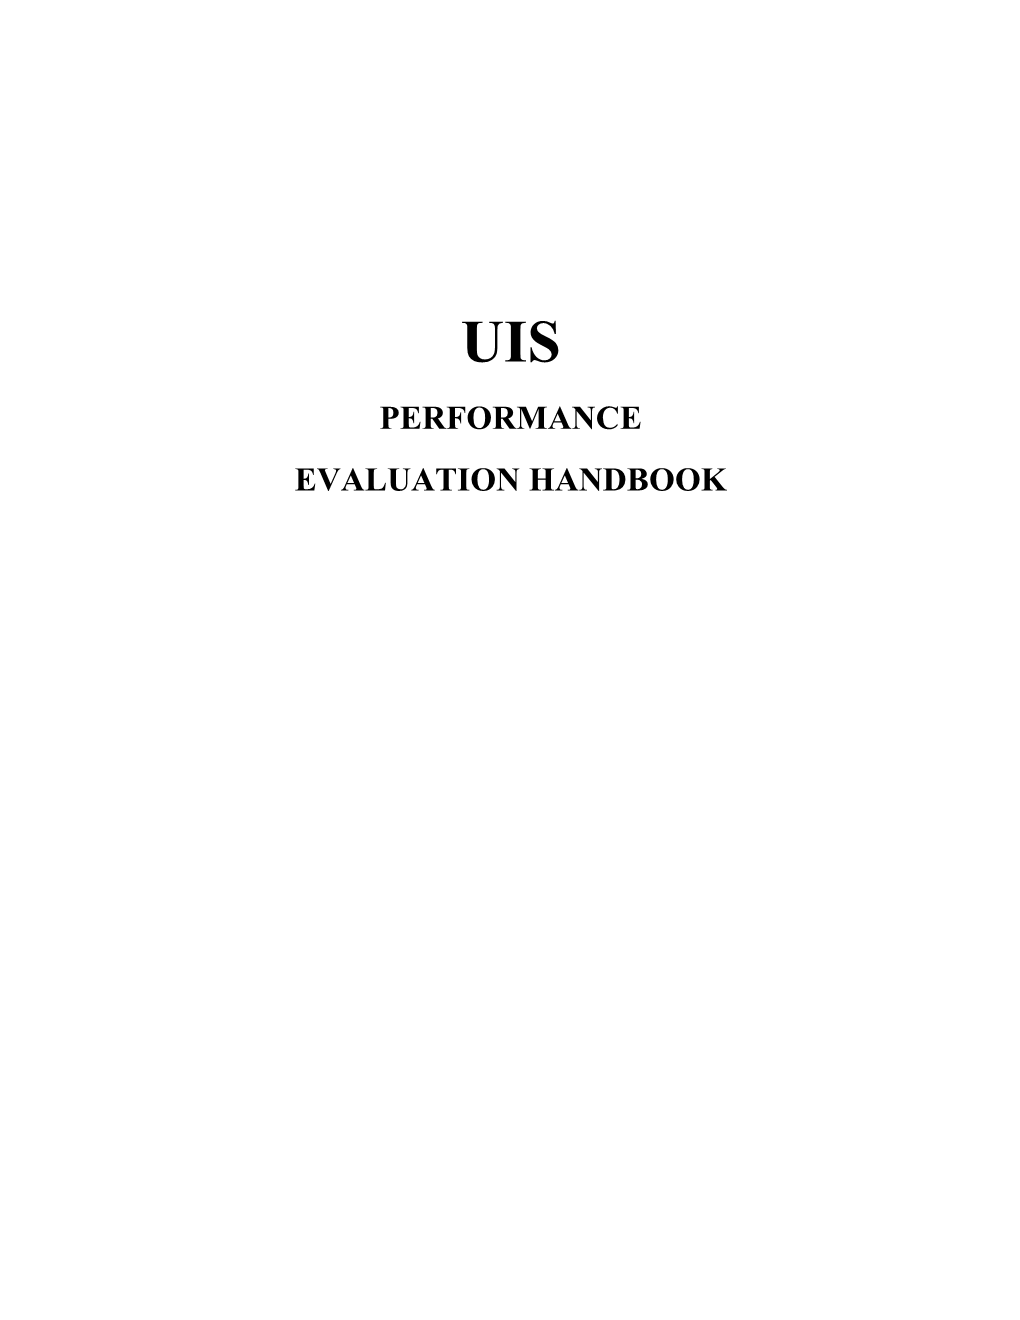 Evaluation Handbook